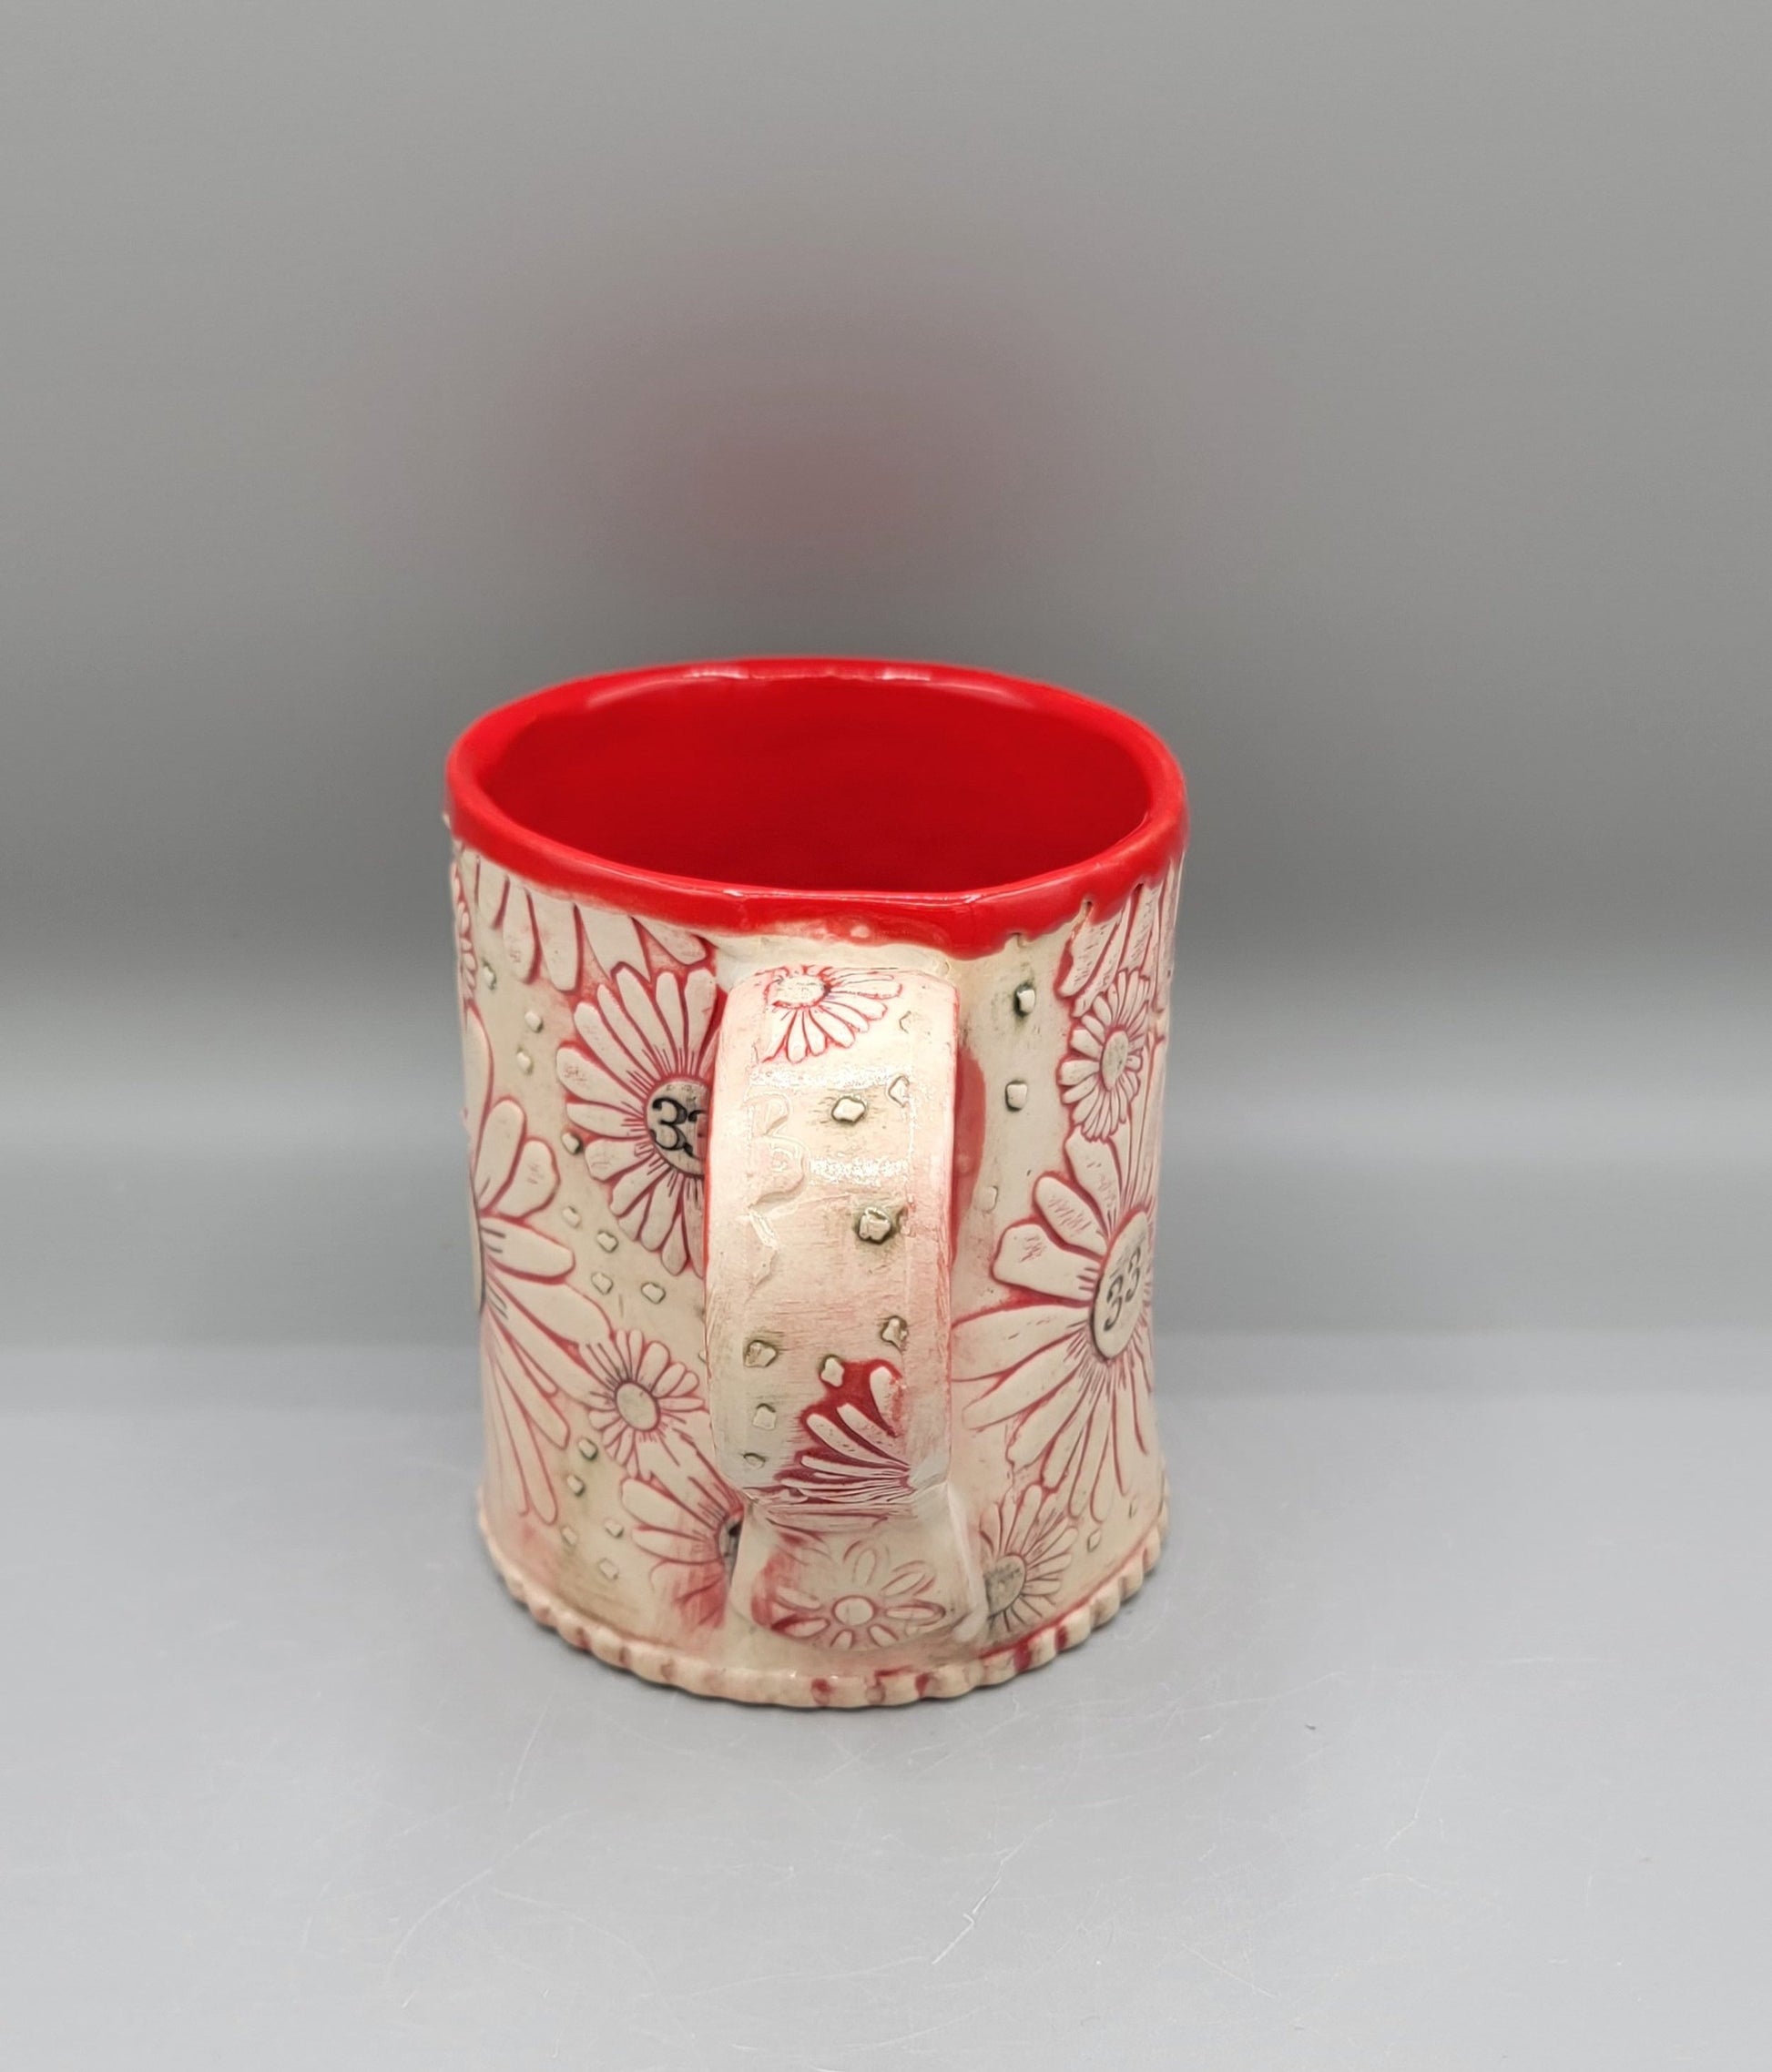 14-15oz Hand Painted, Embossed BMFS Red Daisies Ceramic Mug